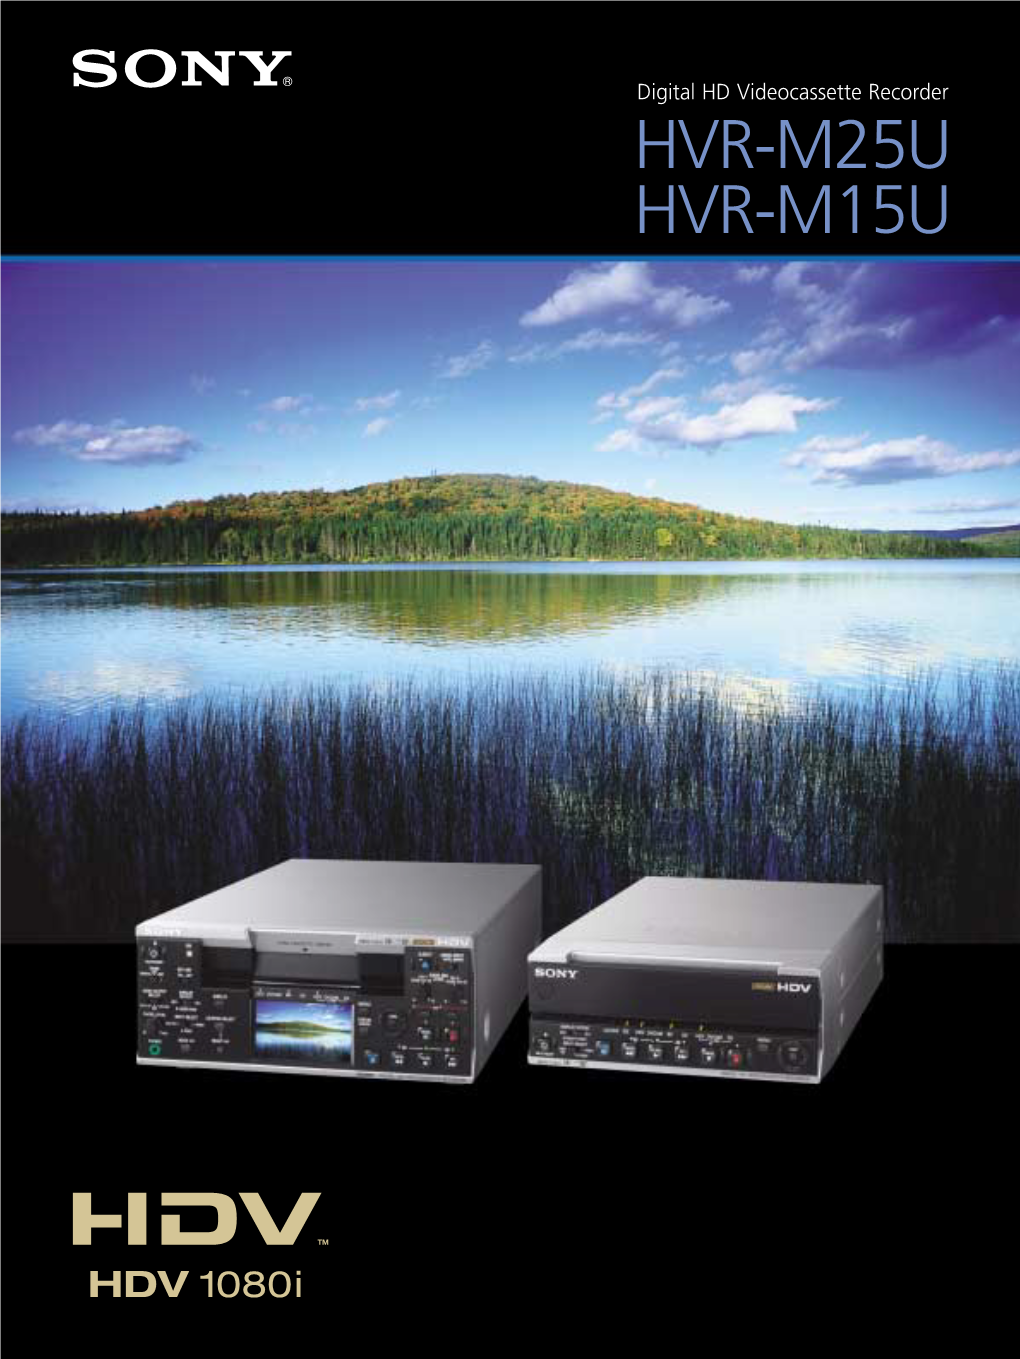 The Sony HVR-M25U and HVR-M15U HDV 1080I Vtrs